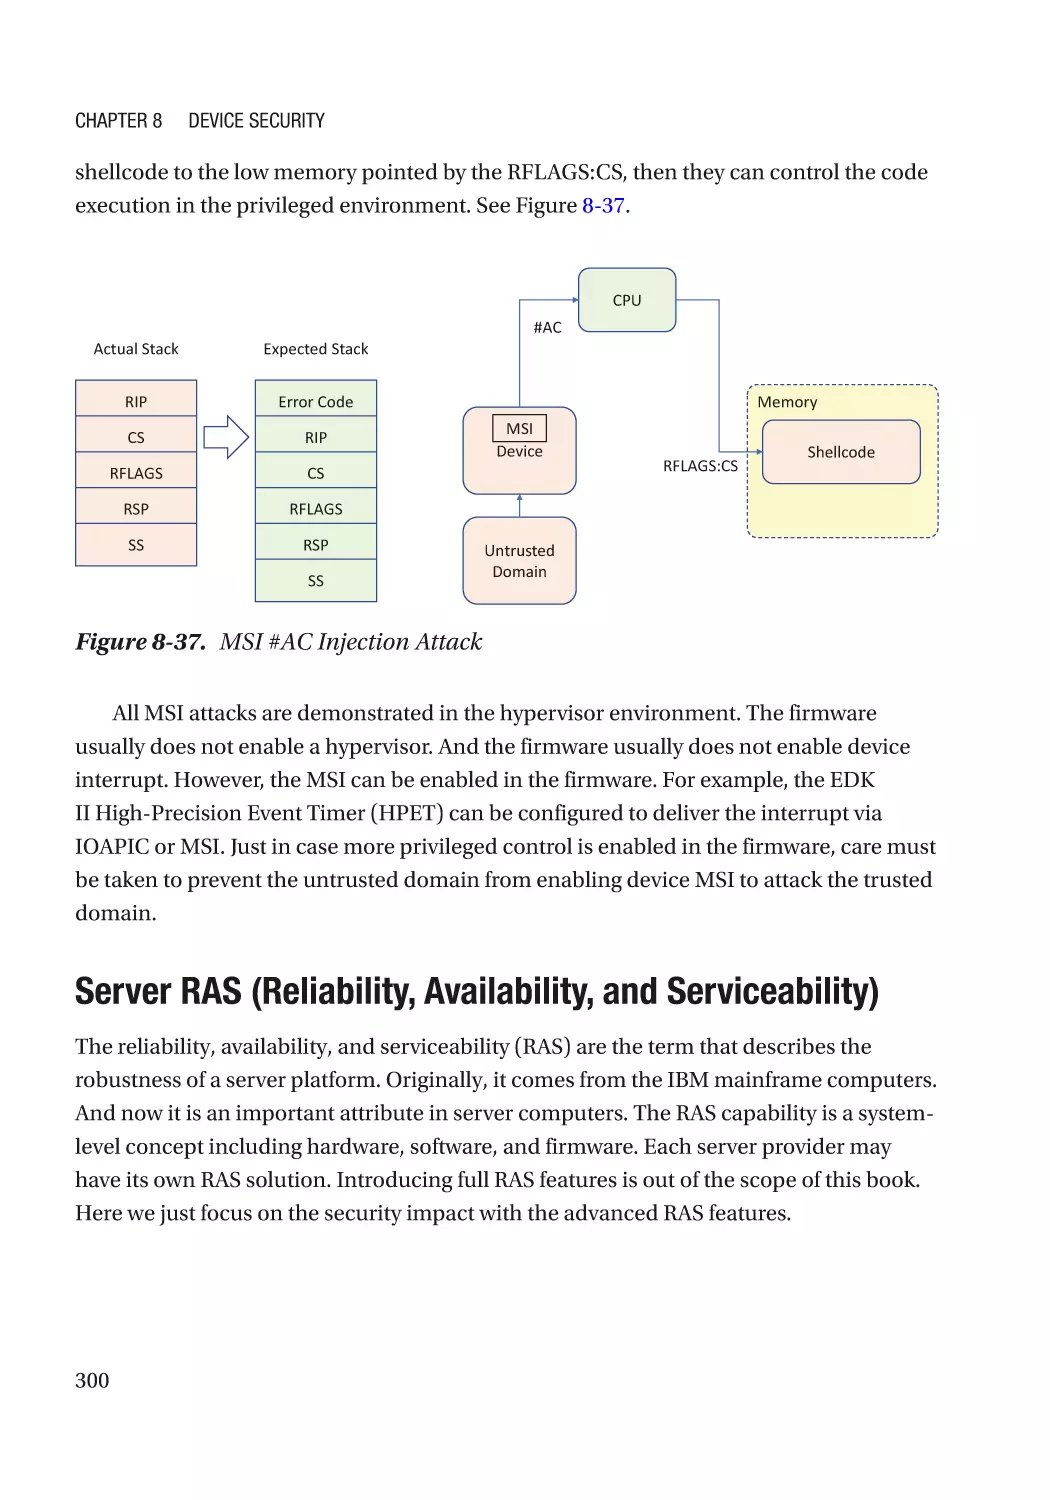 Server RAS (Reliability, Availability, and Serviceability)